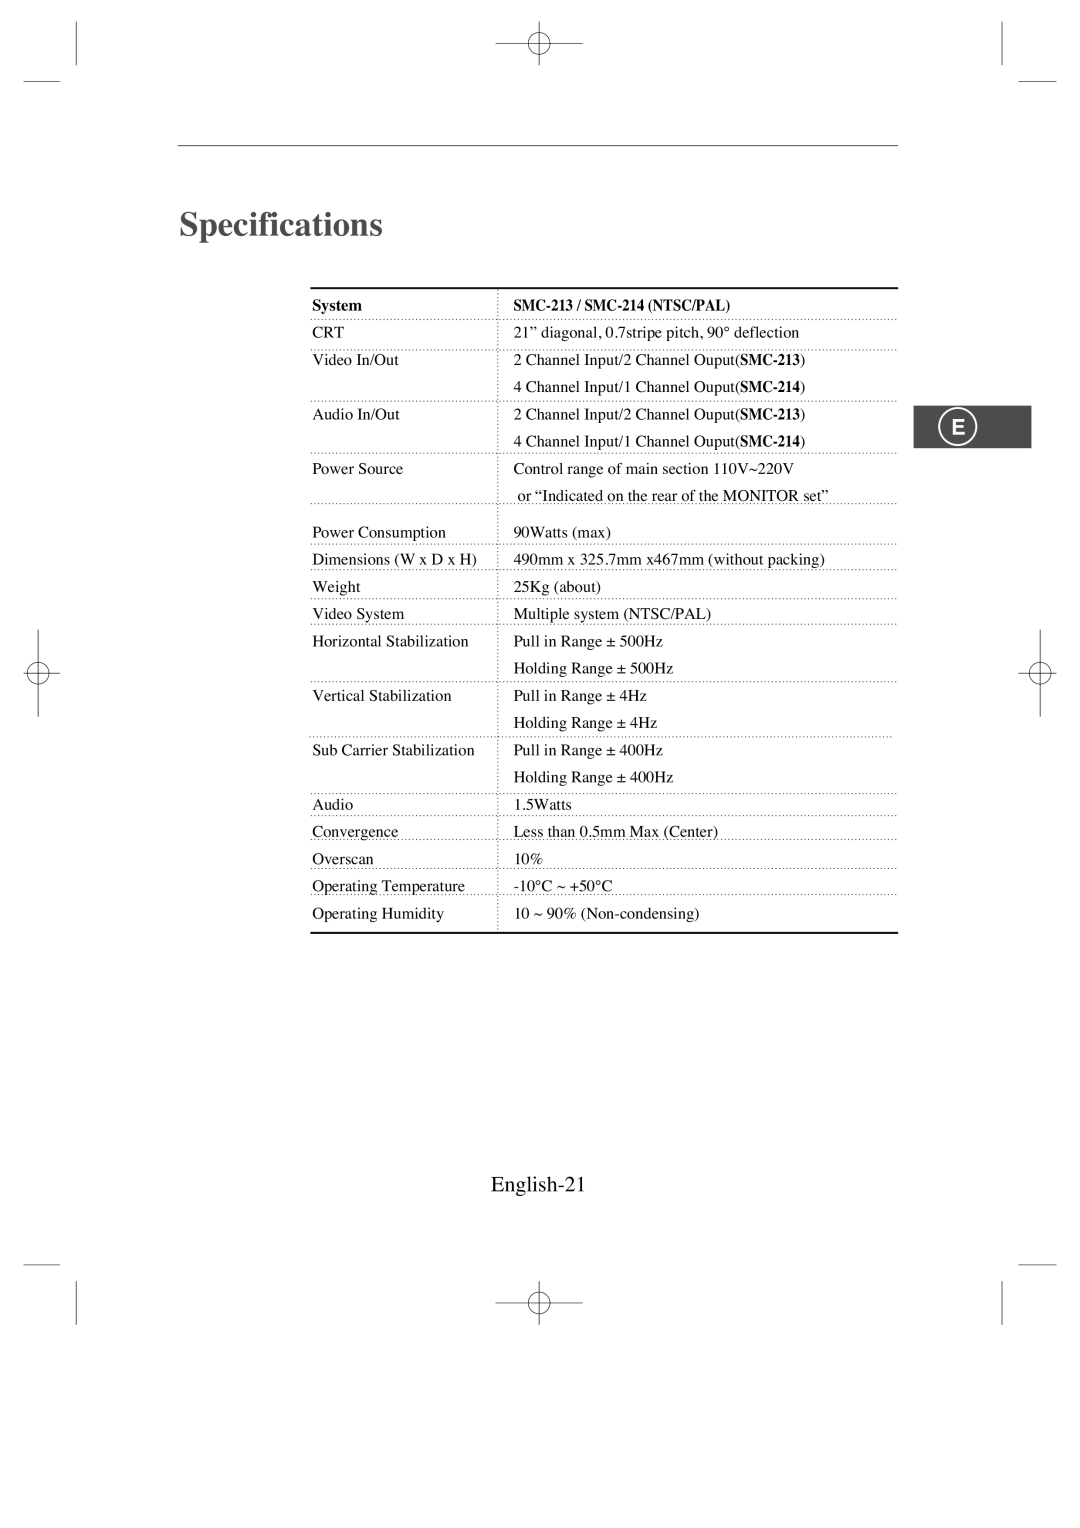 Samsung SMC-214 U manual Specifications, English-21, System, SMC-213 / SMC-214 NTSC/PAL 